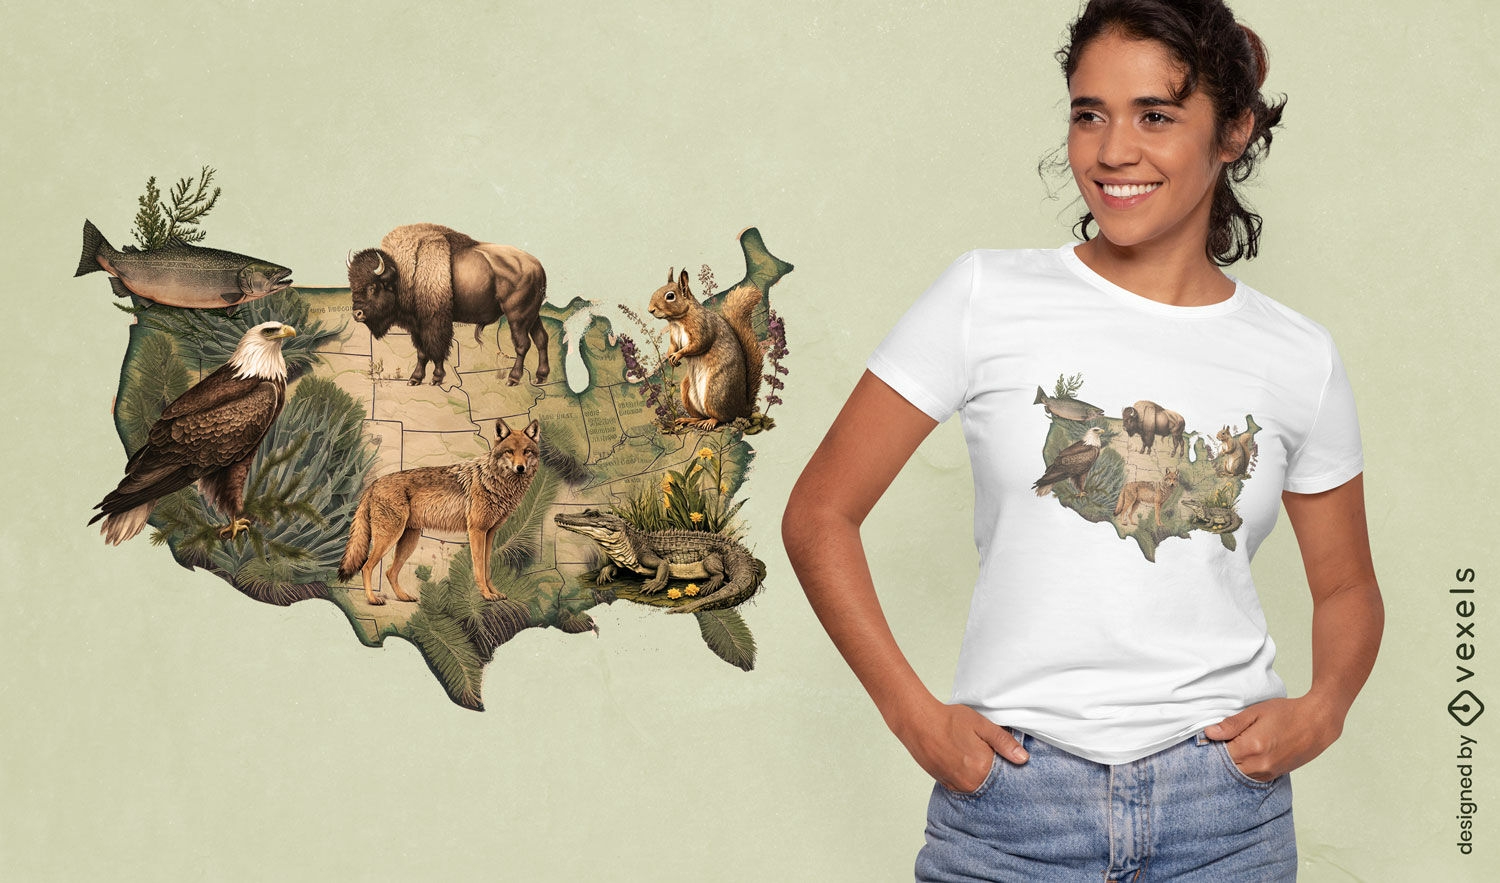 Diseño de camiseta de mapa de vida silvestre estadounidense.